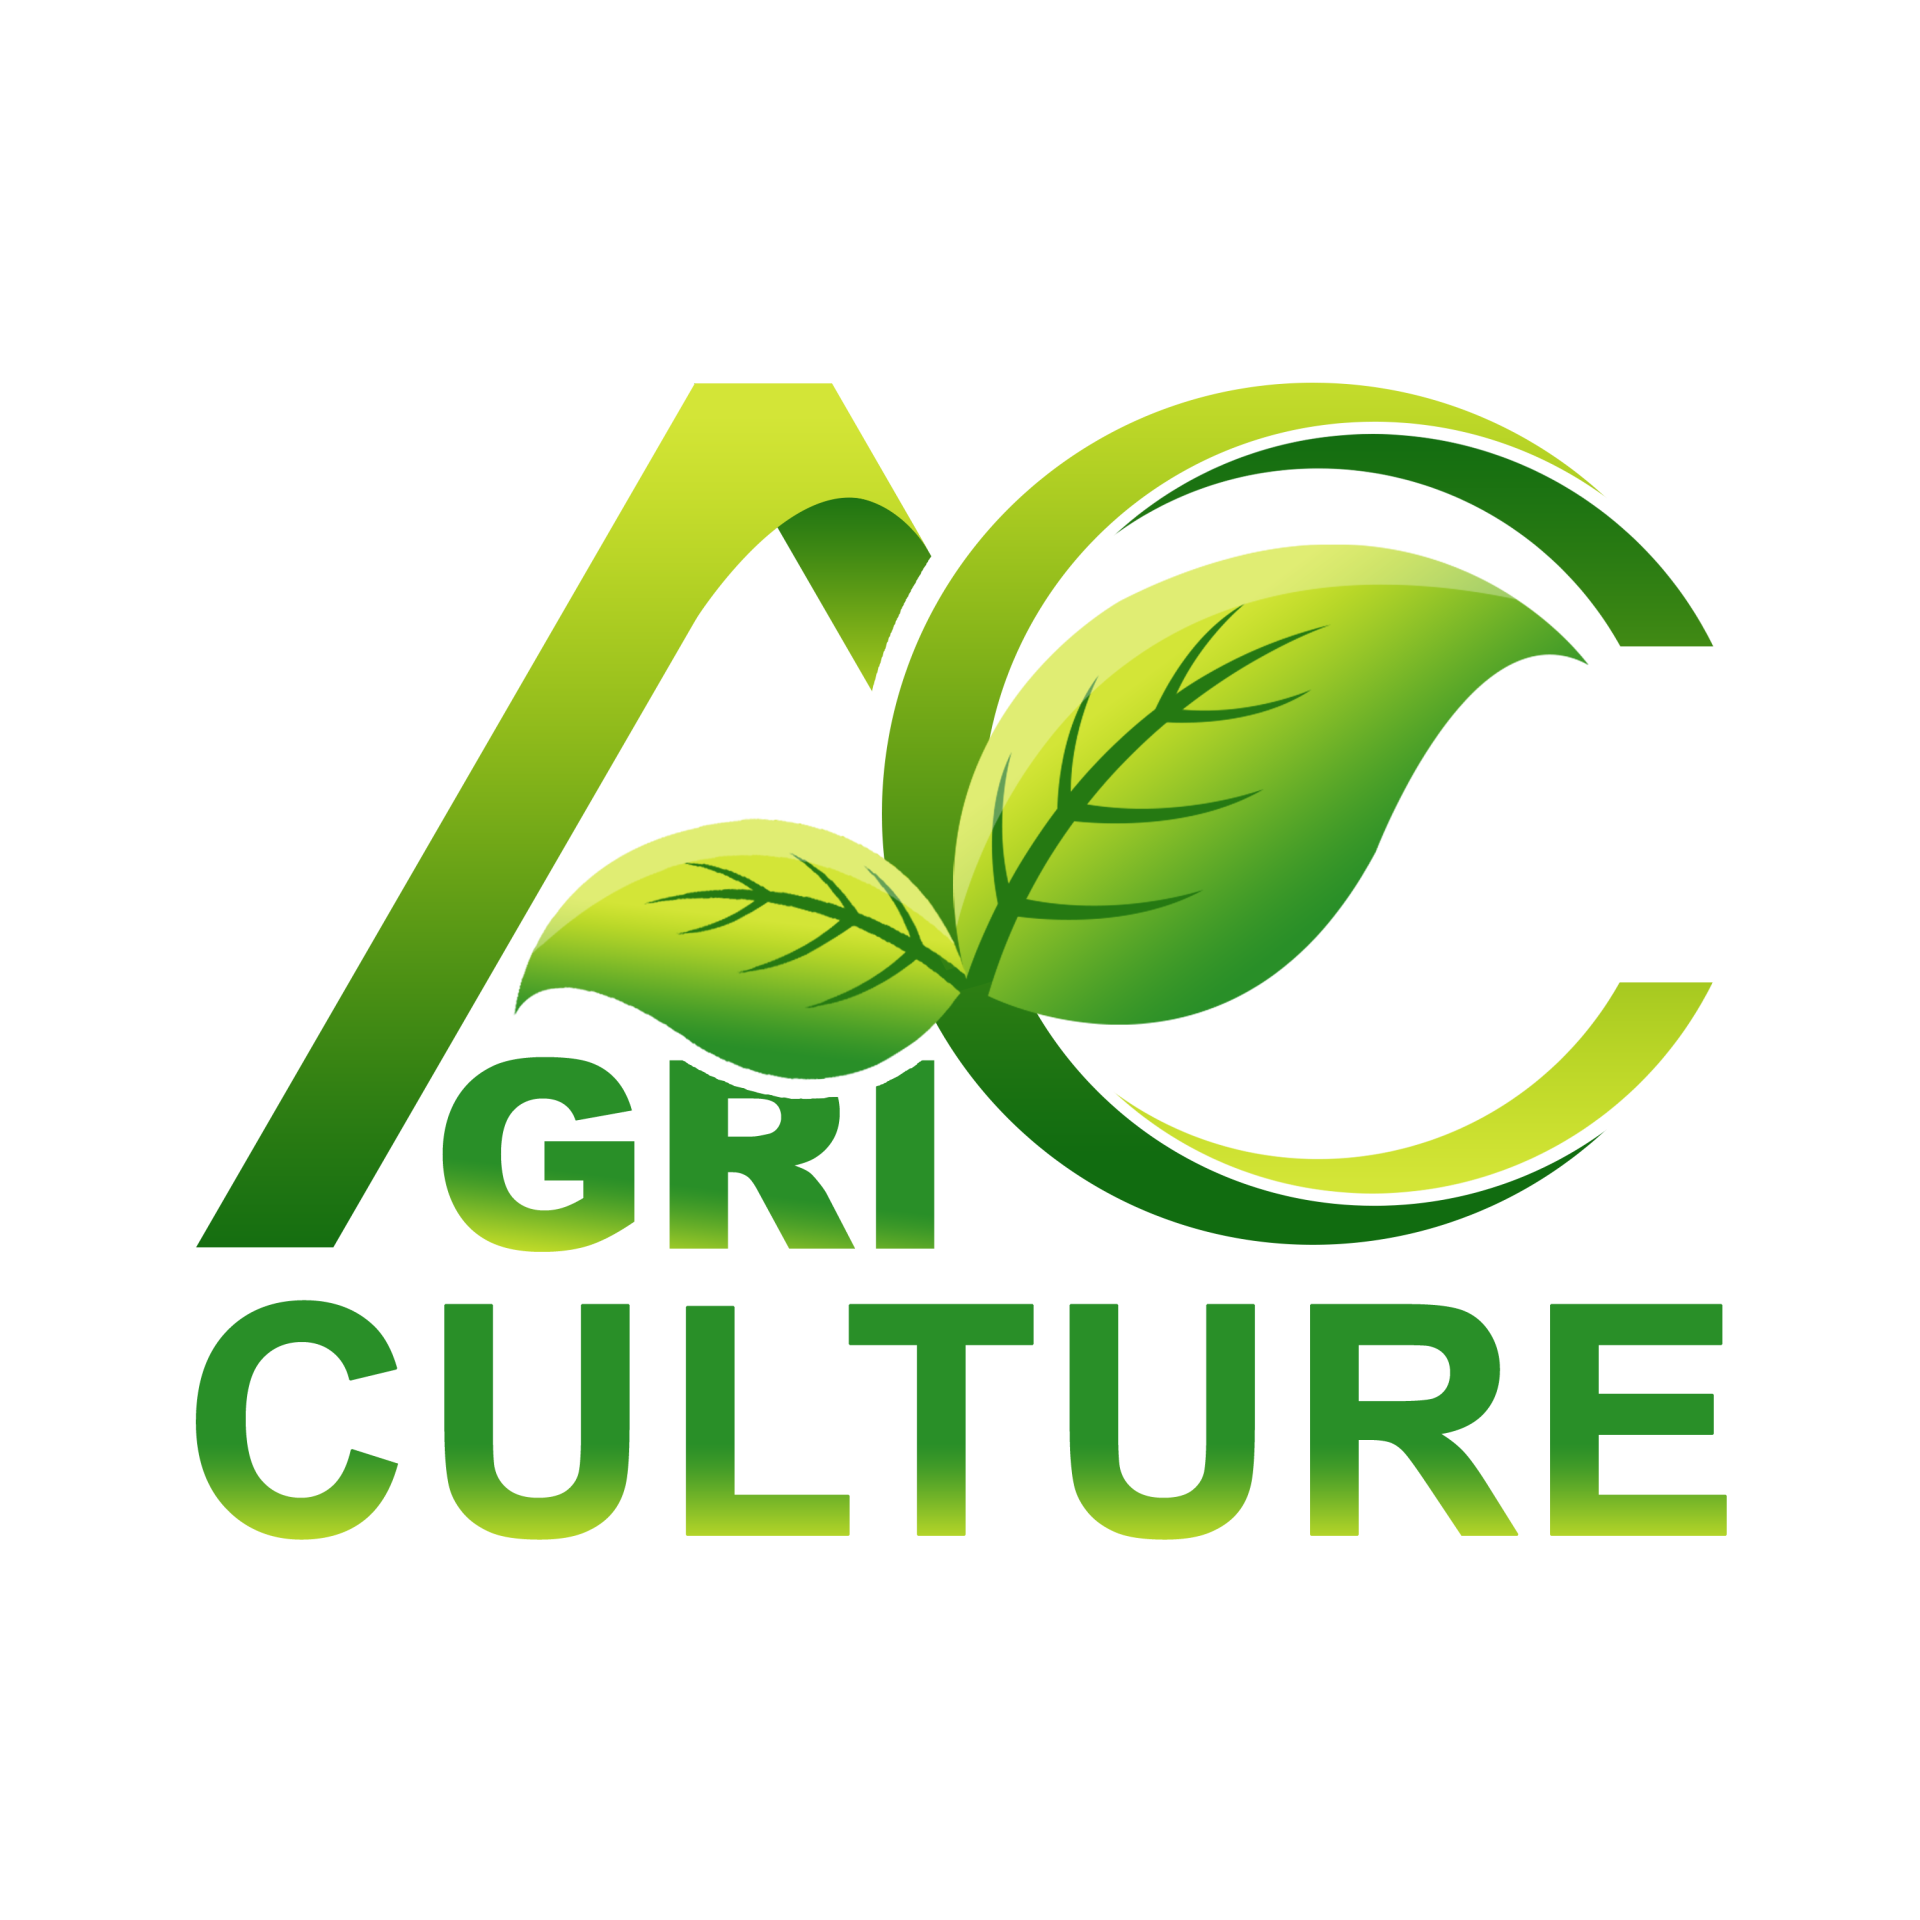 agriculture logo ideas 2